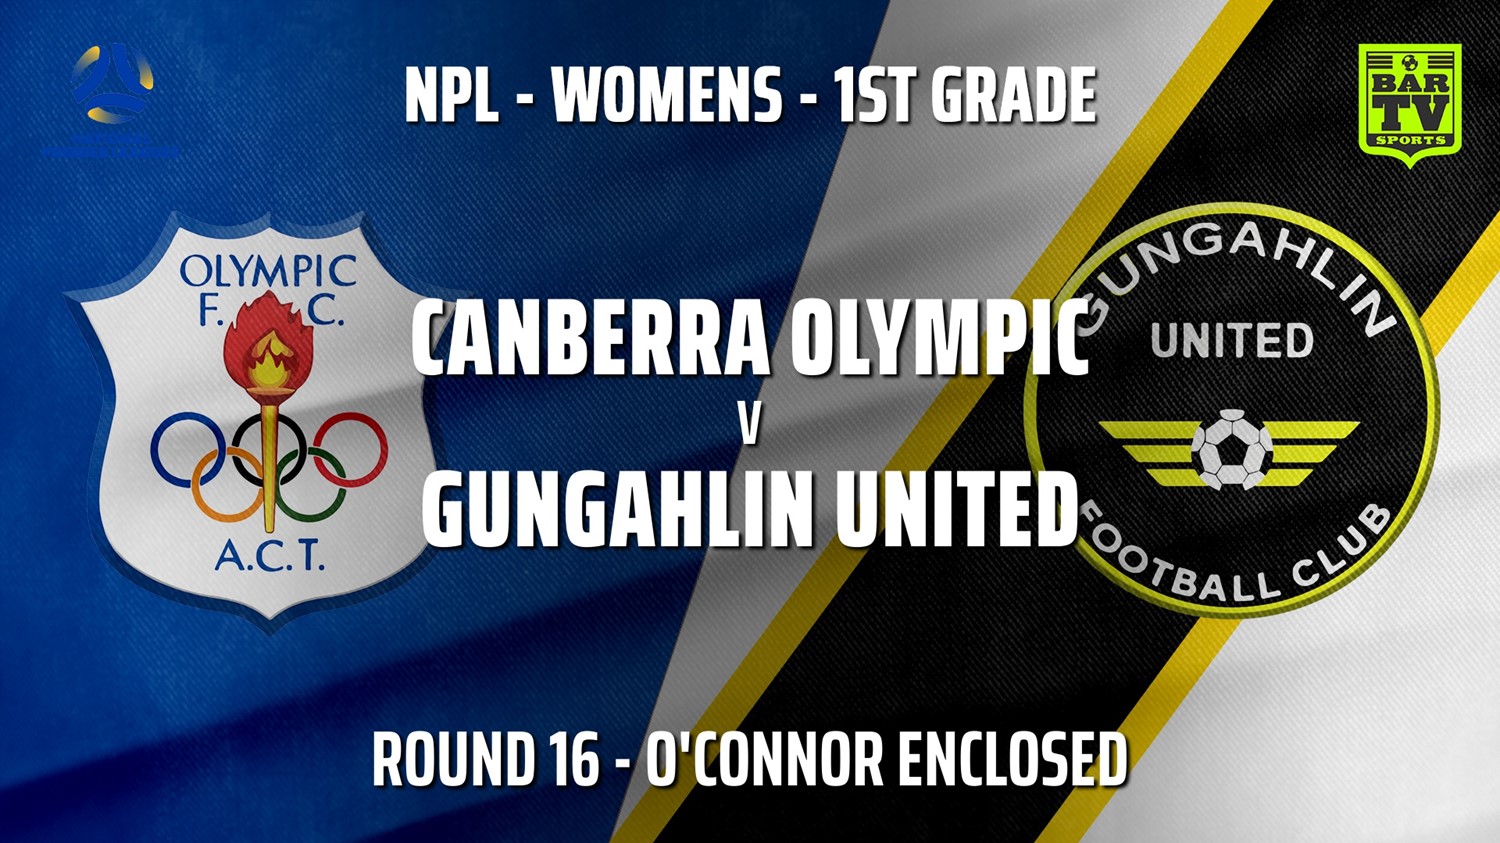 210801-Capital Womens Round 16 - Canberra Olympic FC (women) v Gungahlin United FC (women) Slate Image